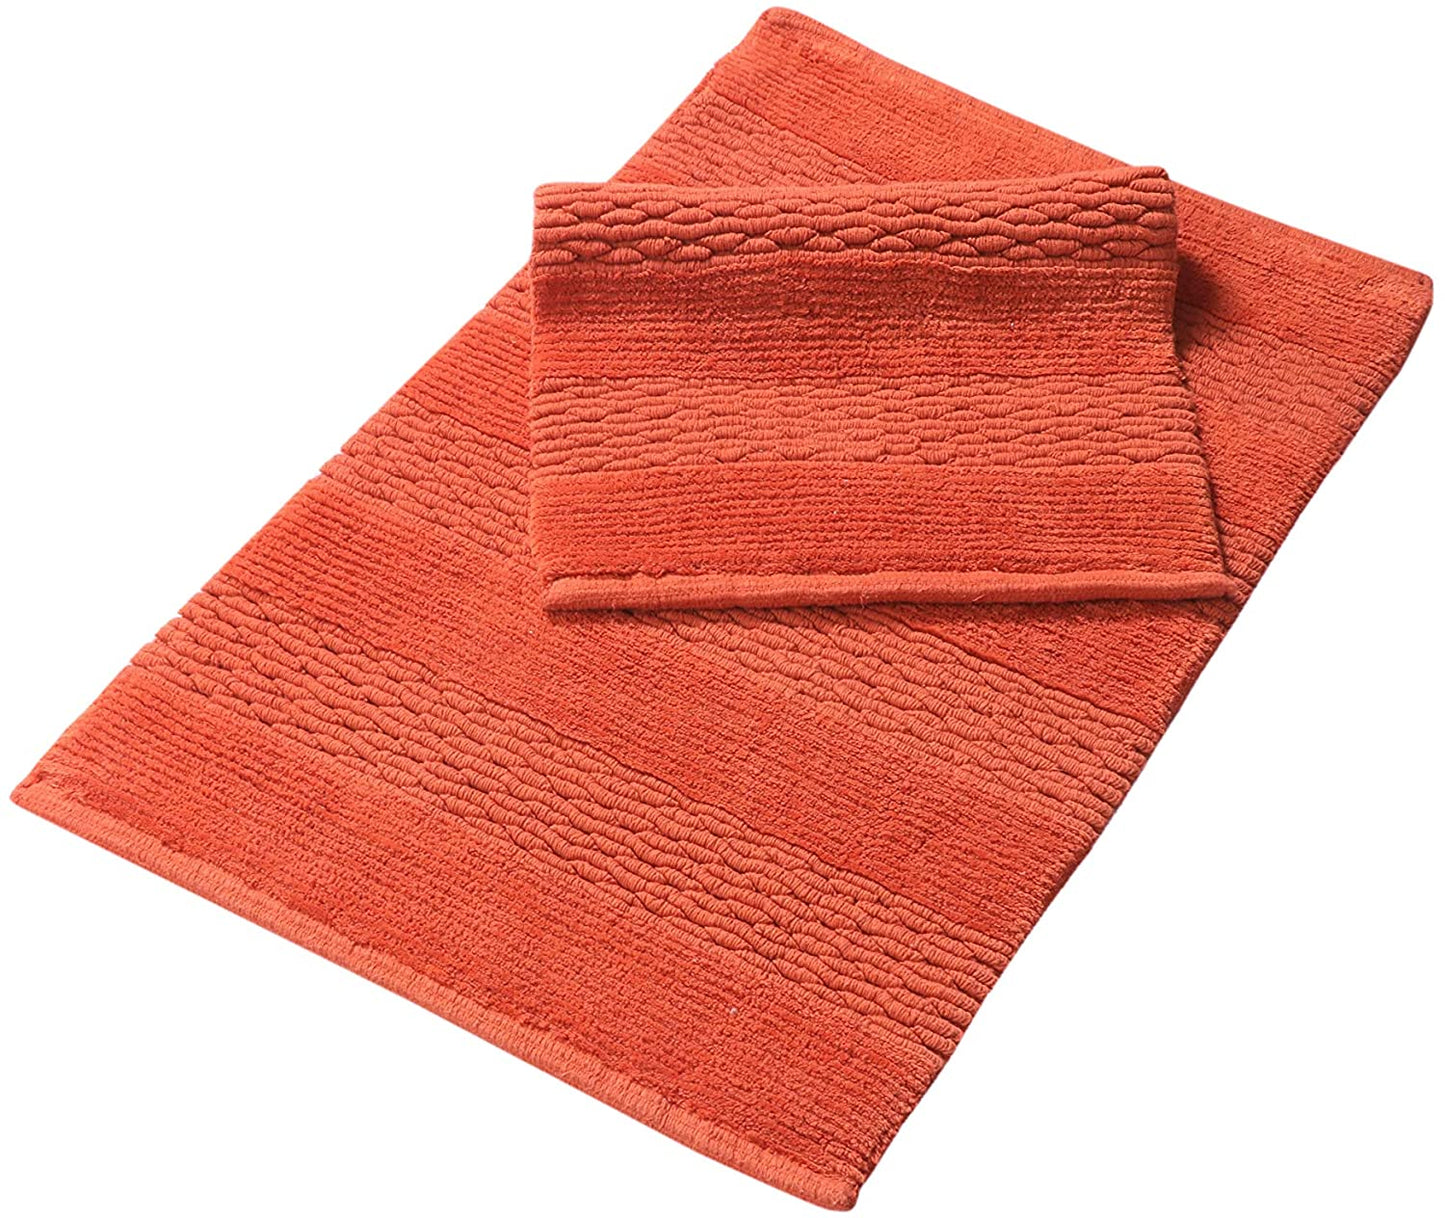 Cotton bath rugs water absorbent stripe design bathmat set of 2 - TreeWool Bathrugs#color_rusty